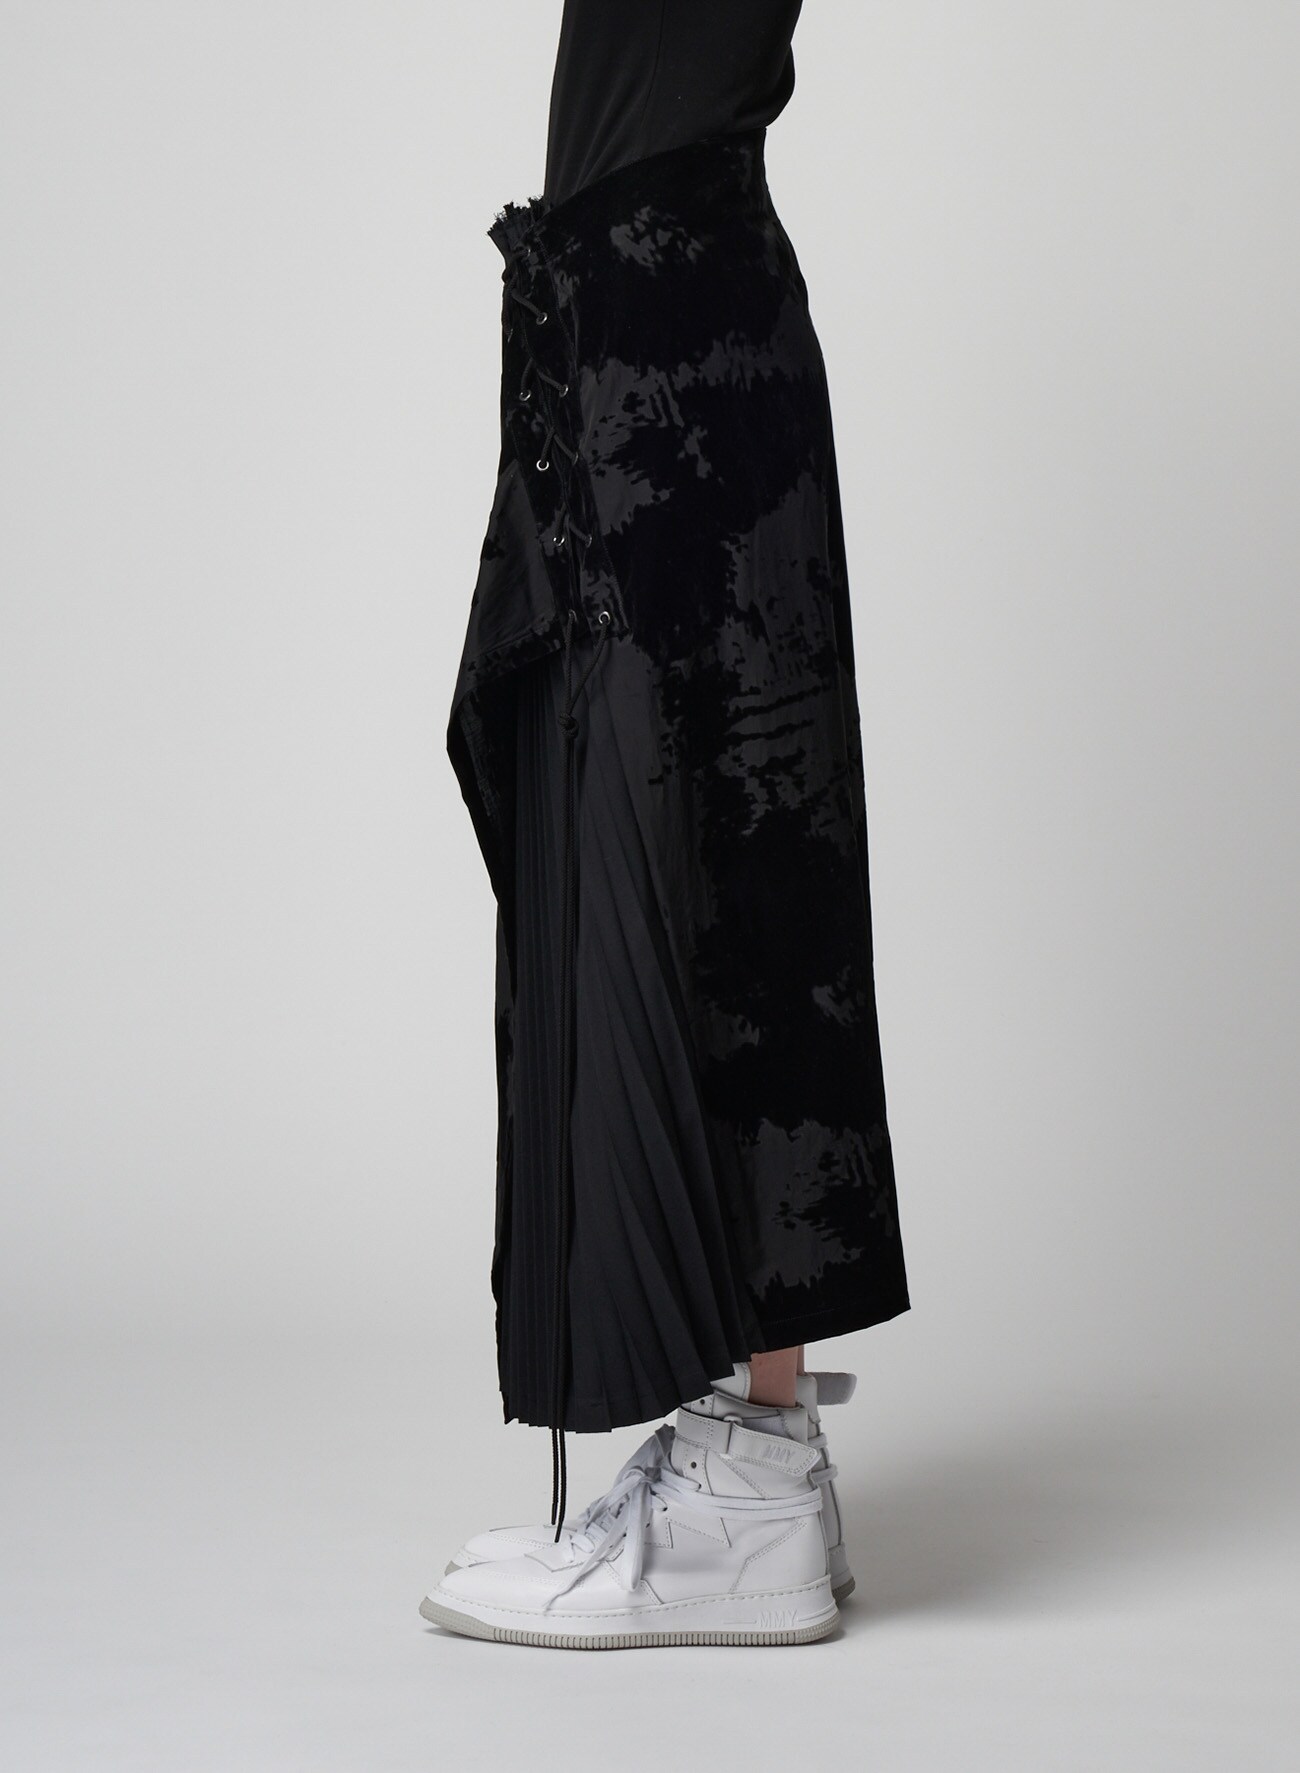 Flocky Print + Serge Combination Lace Up Pleats Skirt